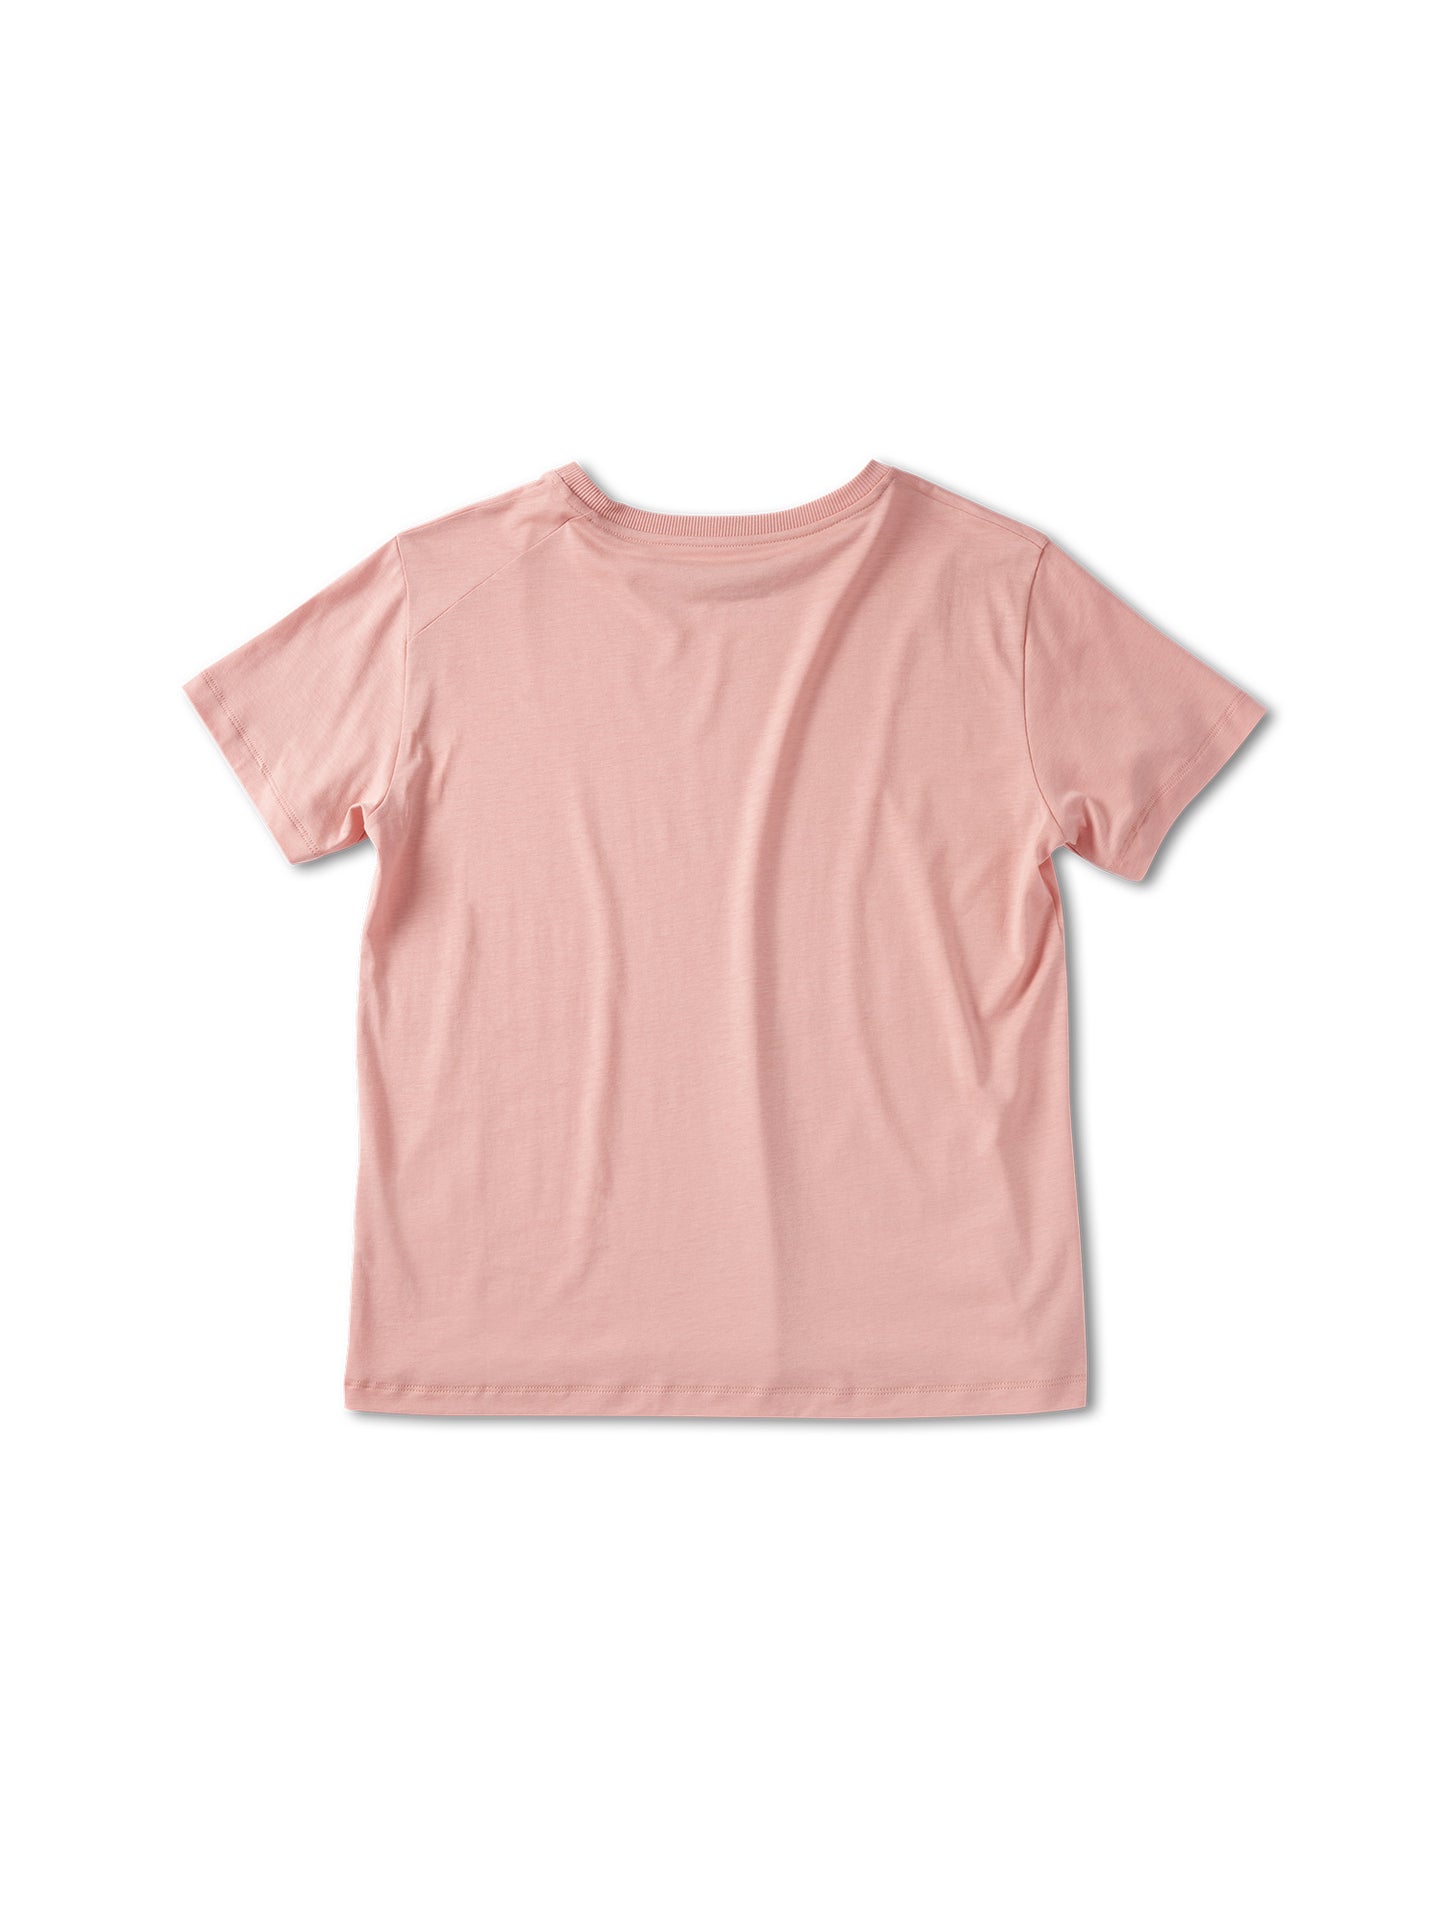 pinqponq-Tshirt-Tencel-Cotton-Women-Tone-Wooden-Pink-back